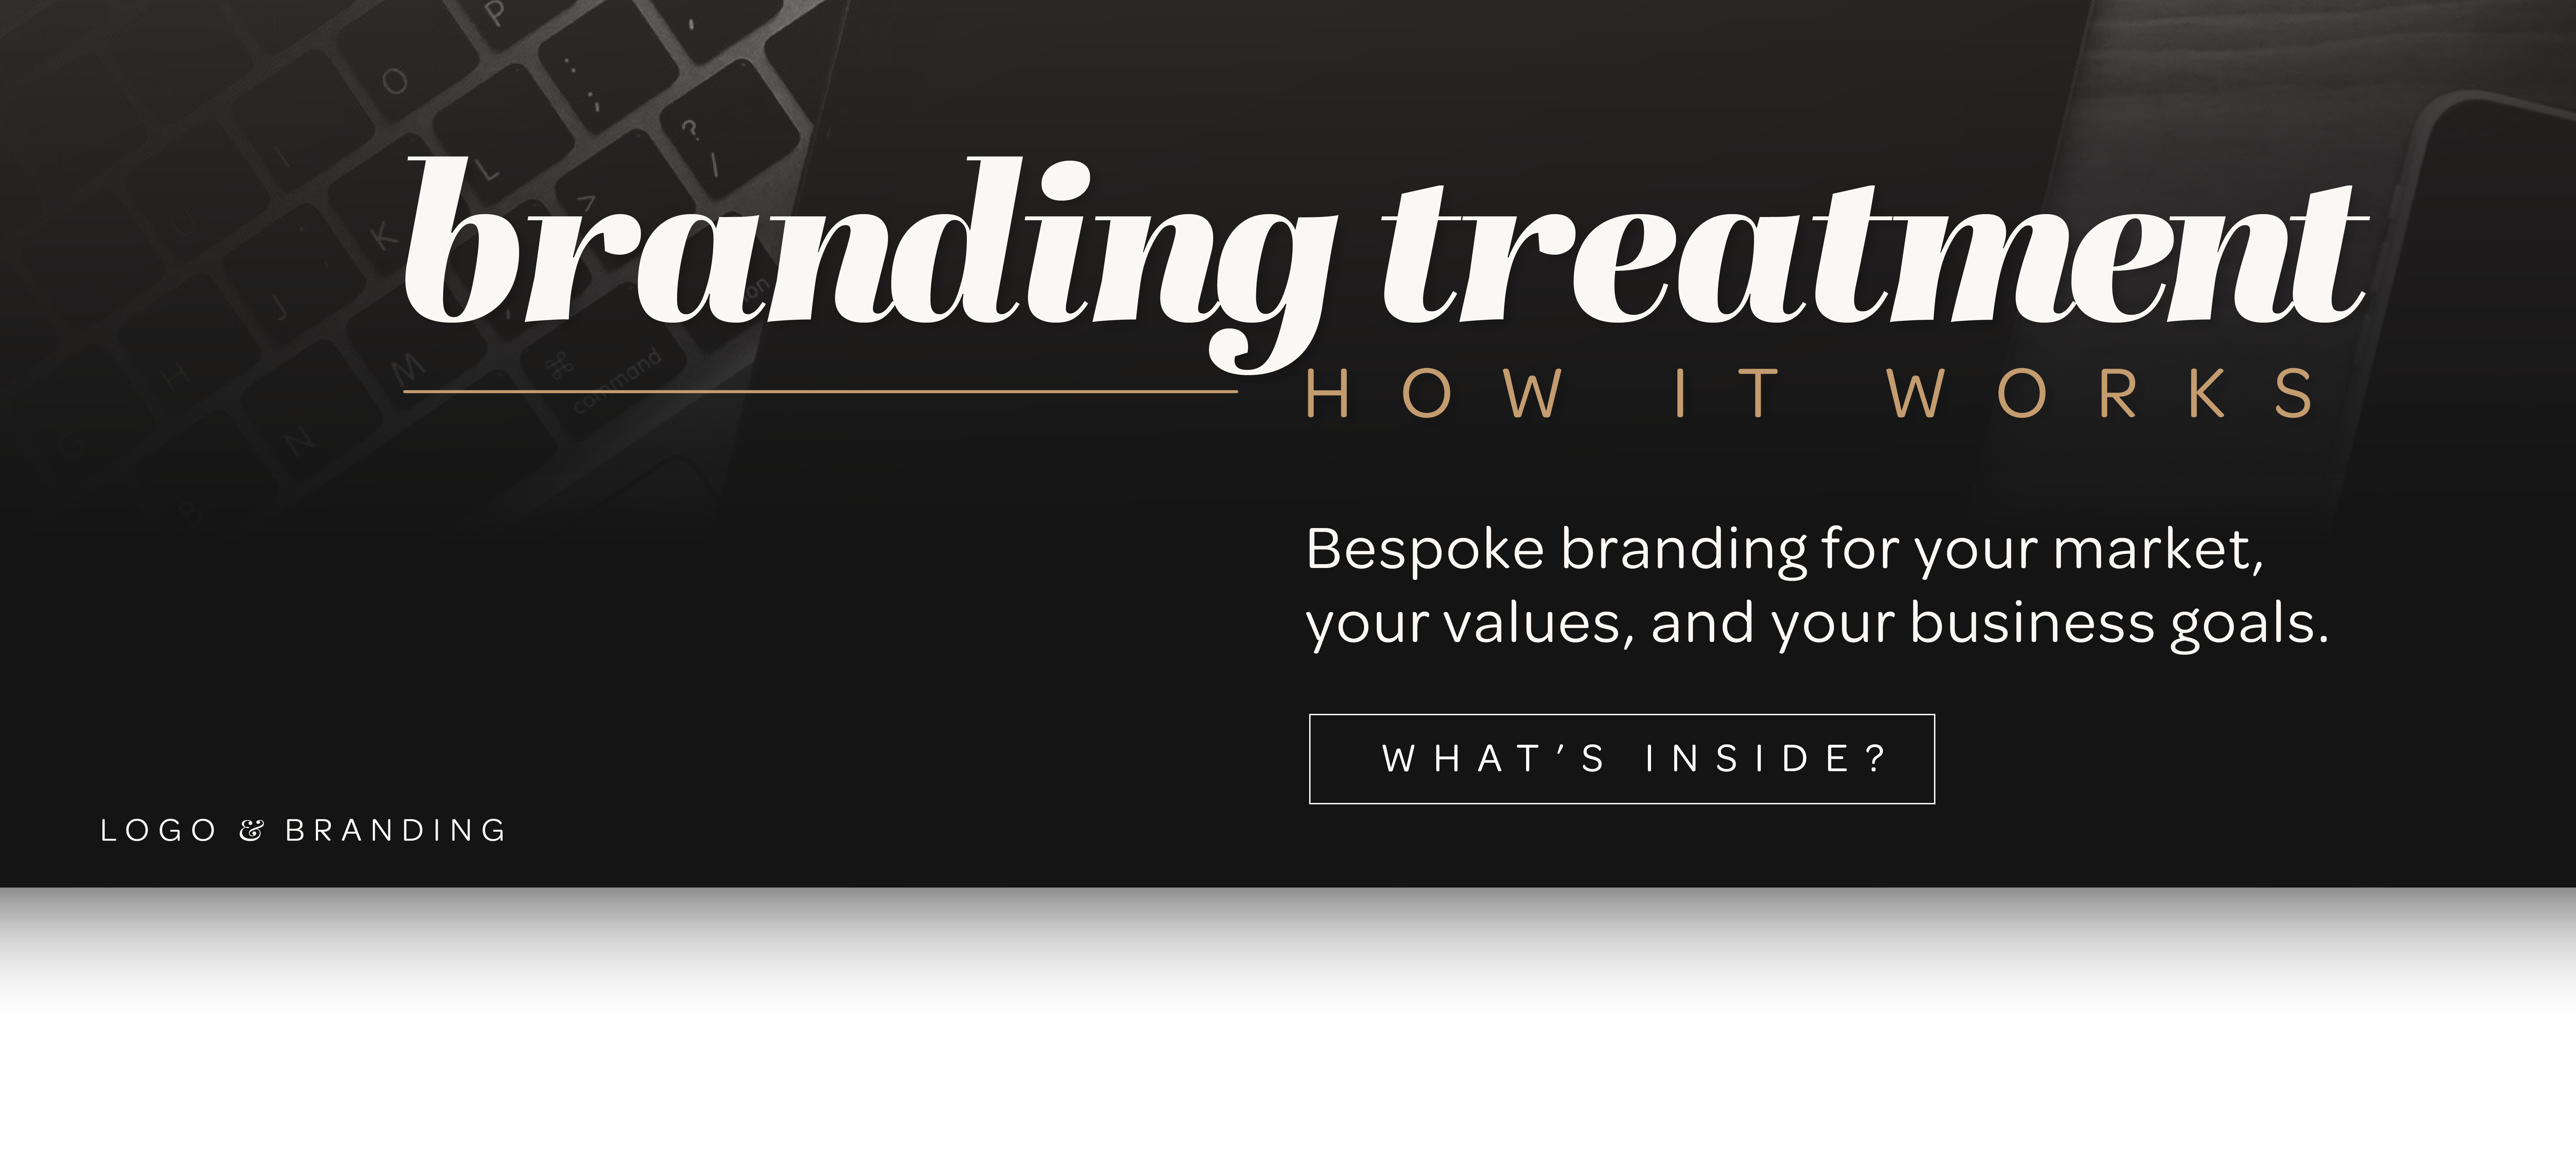 branding treatment luxury brand packages full design suite service marketing goods printing digital brands designer